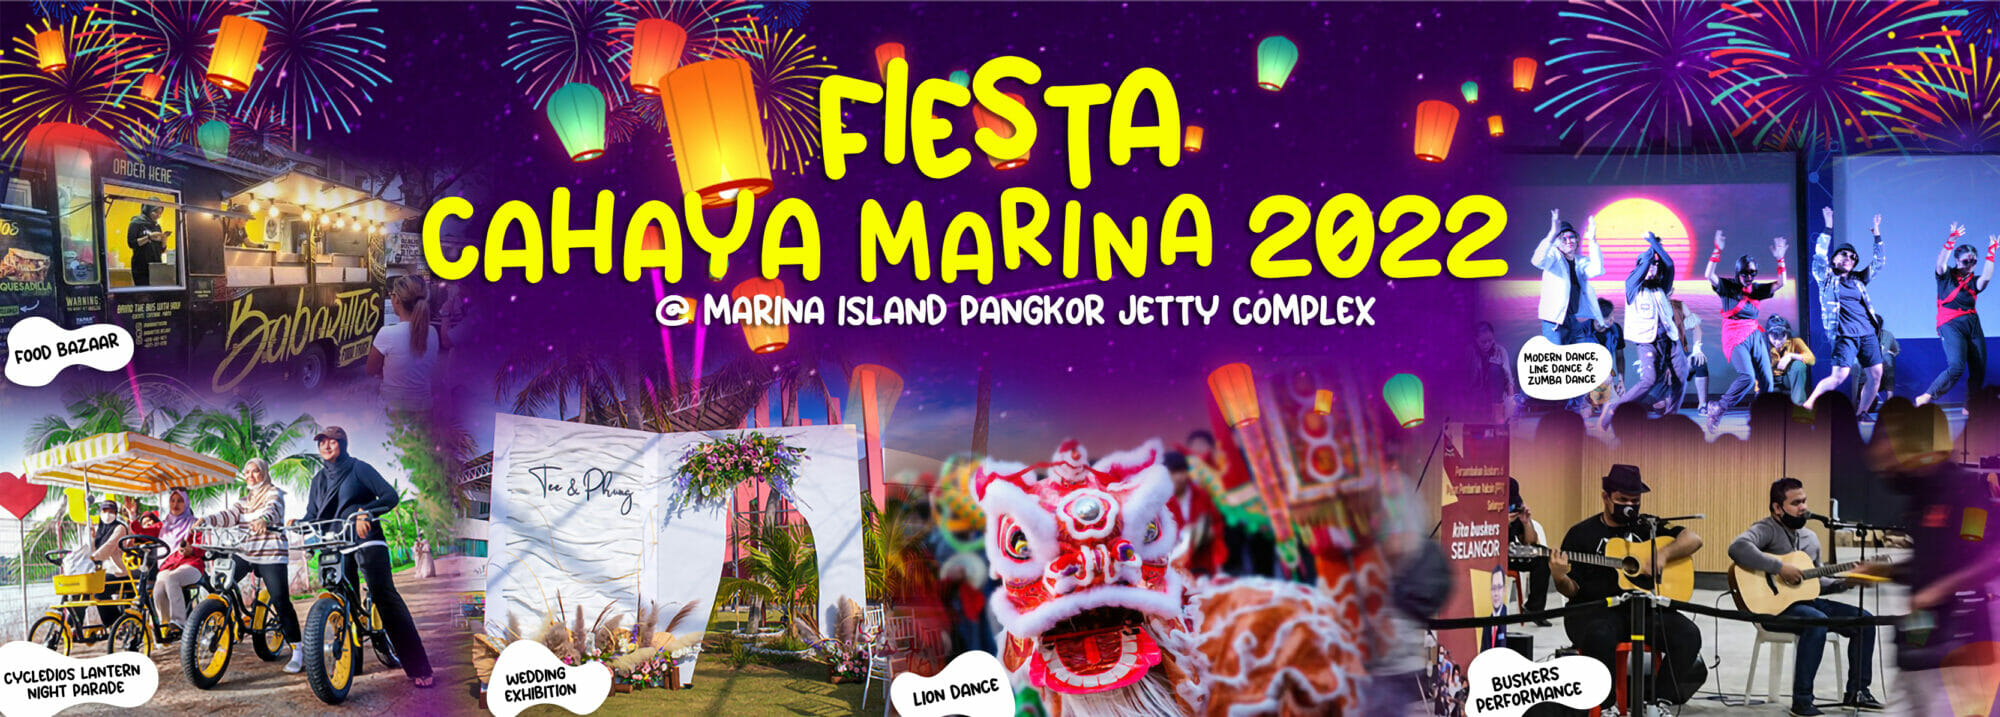 Fiesta Cahaya Marina 2022 (15 September)